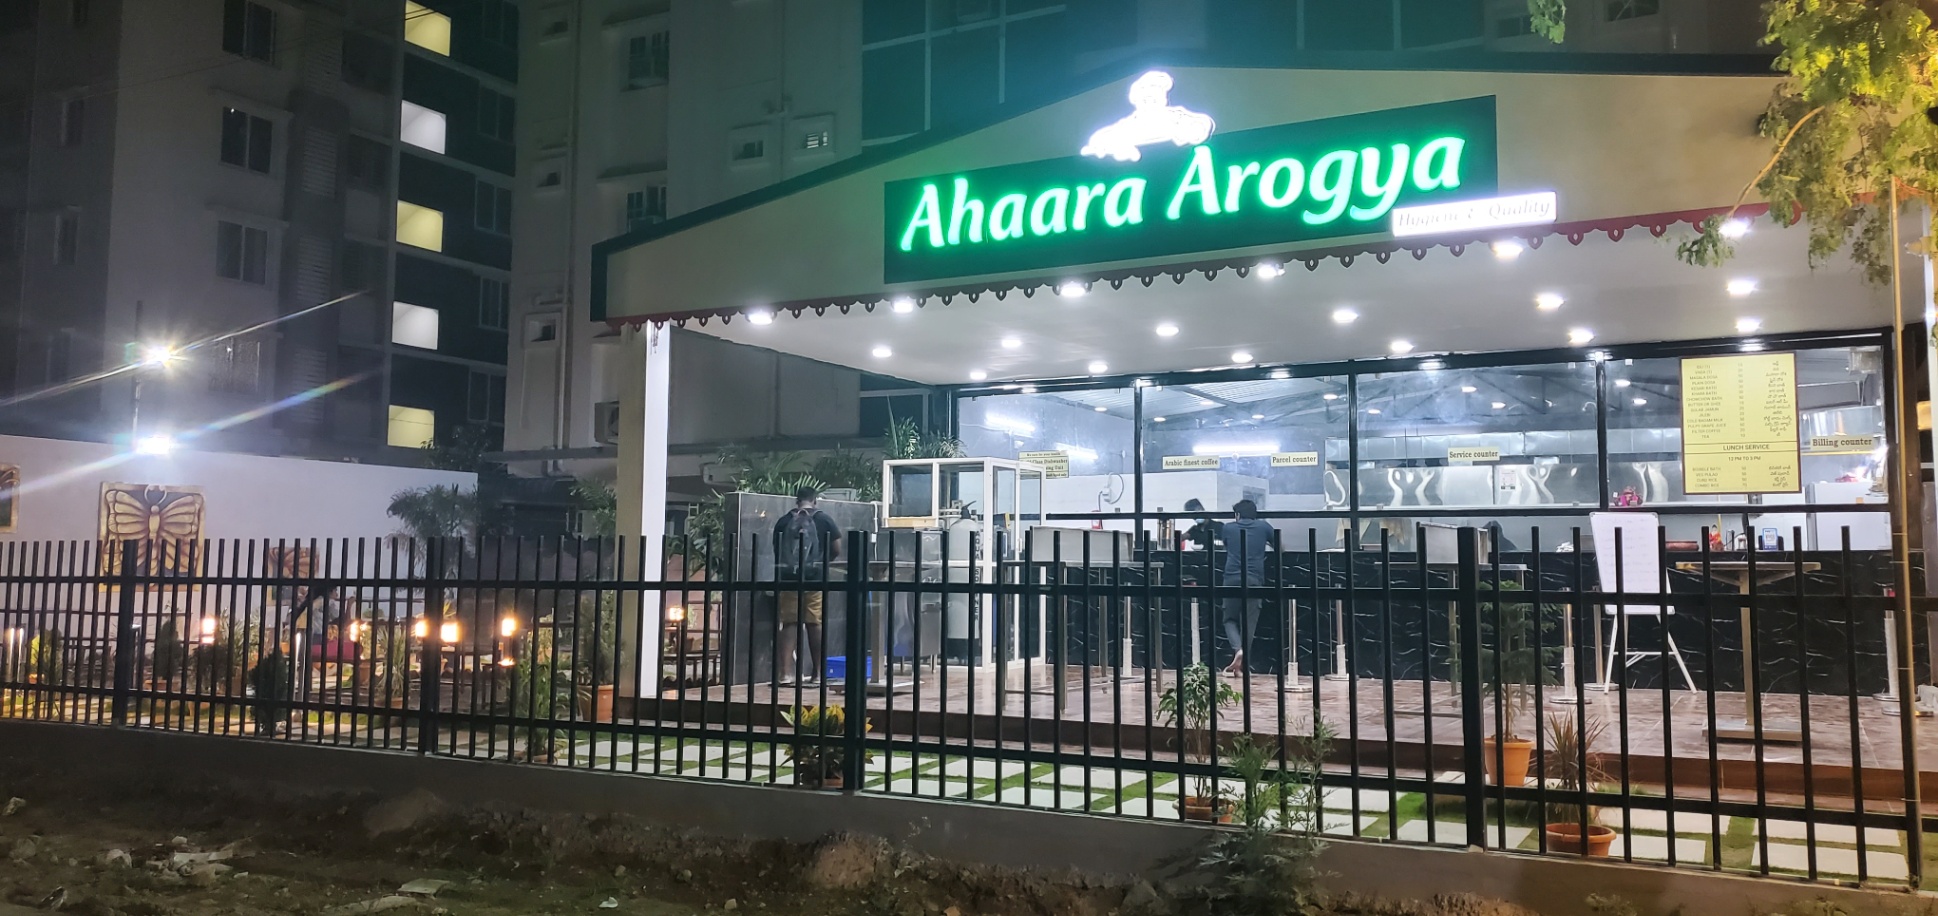 Ahaara arogya tiffins hygiene & quality..Bangalore karnataka recipies